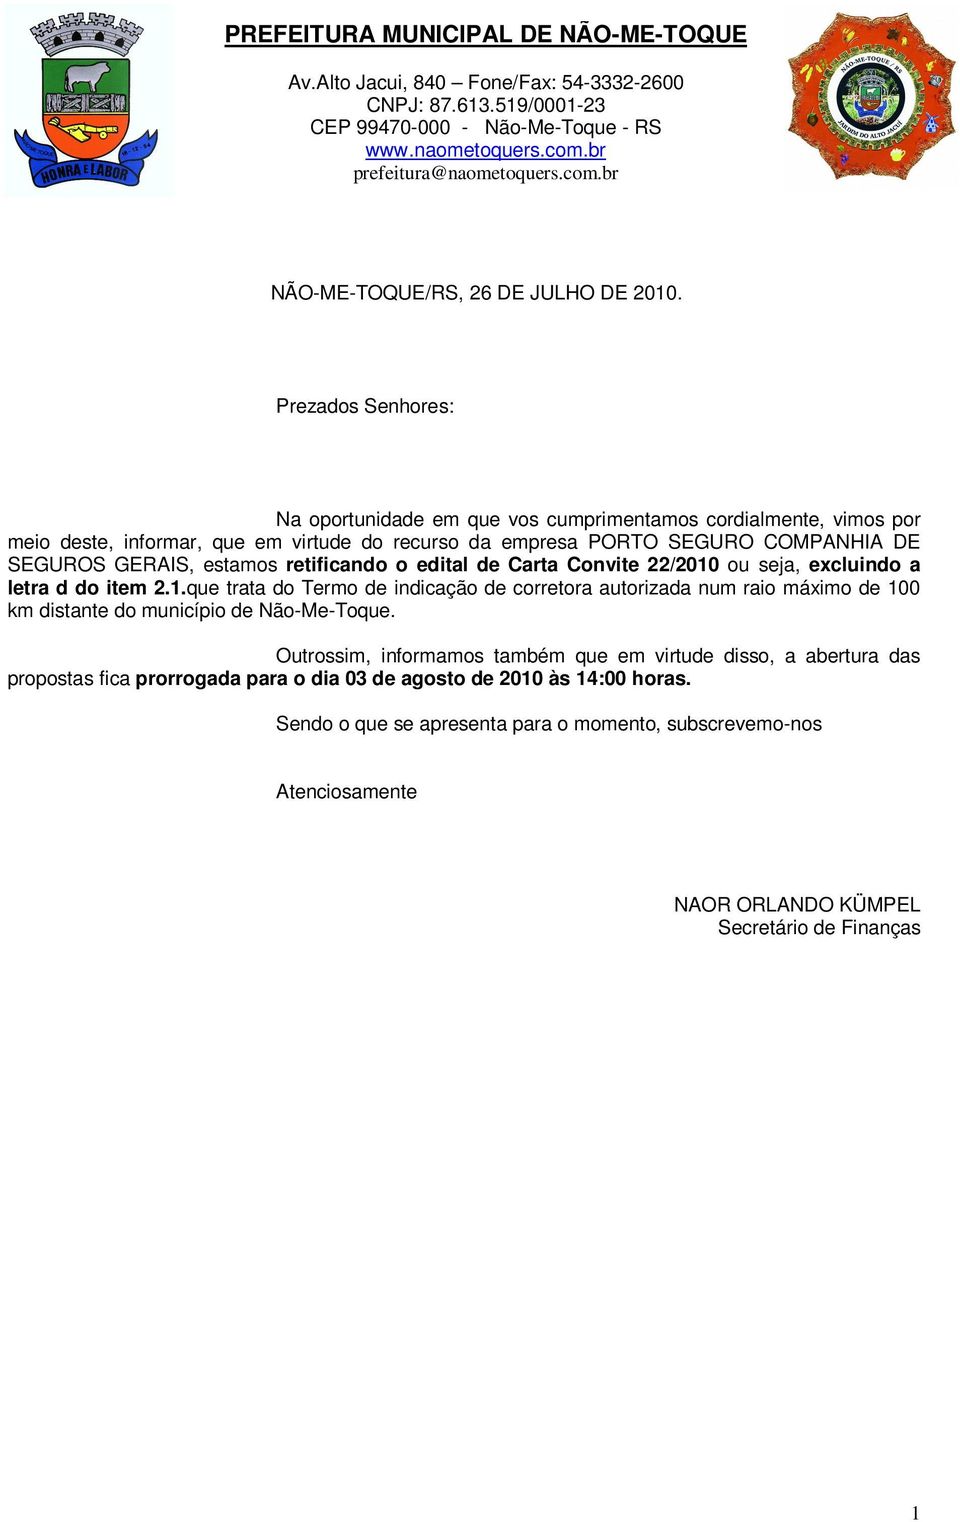 SEGUROS GERAIS, estamos retificando o edital de Carta Convite 22/2010